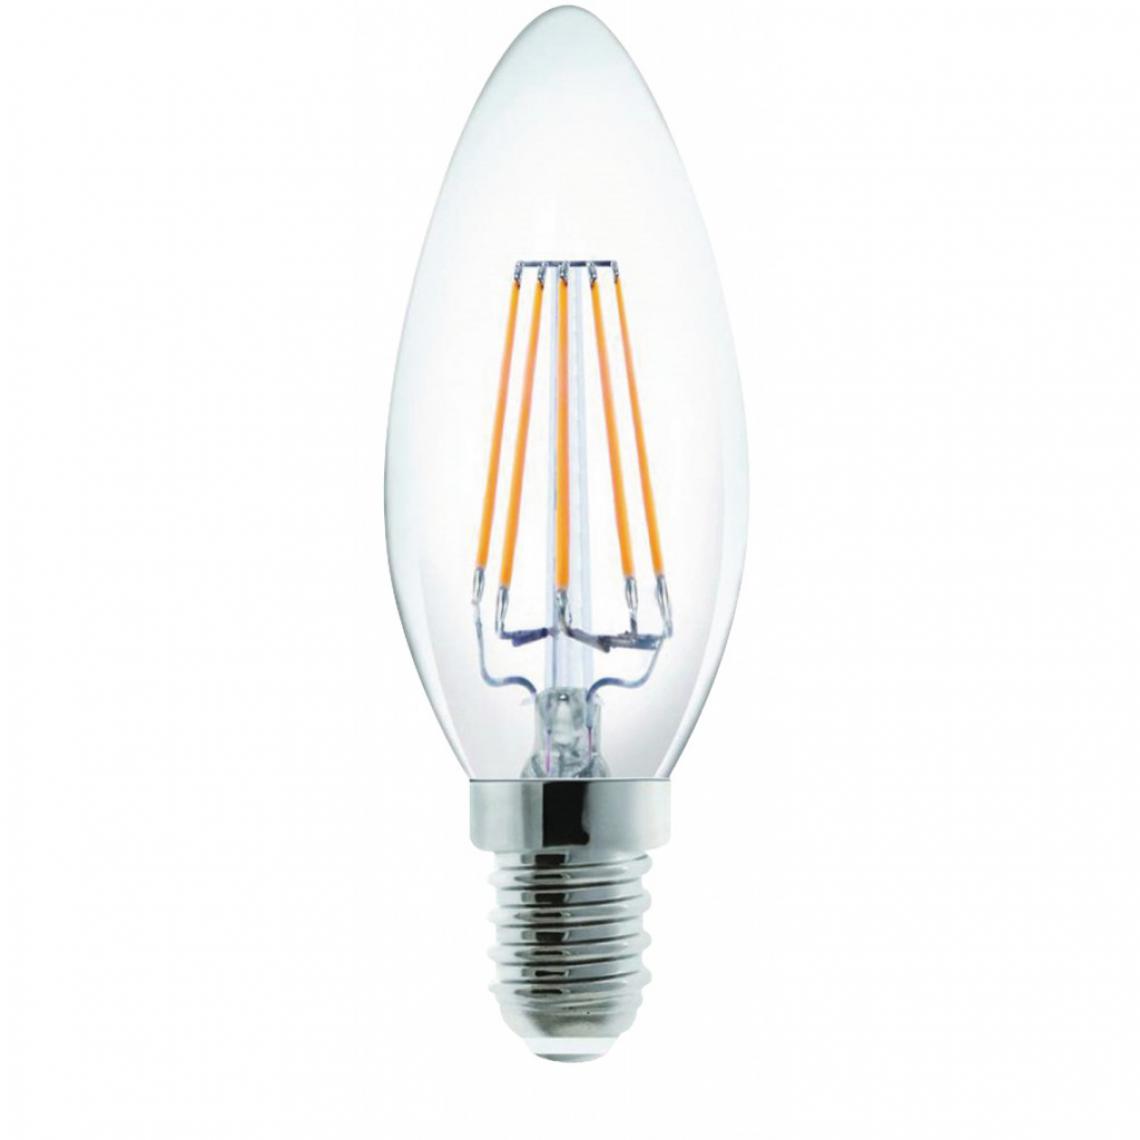 Alpexe - Lampe LED Vintage Bougie 4 W 480 lm 2700 K - Ampoules LED